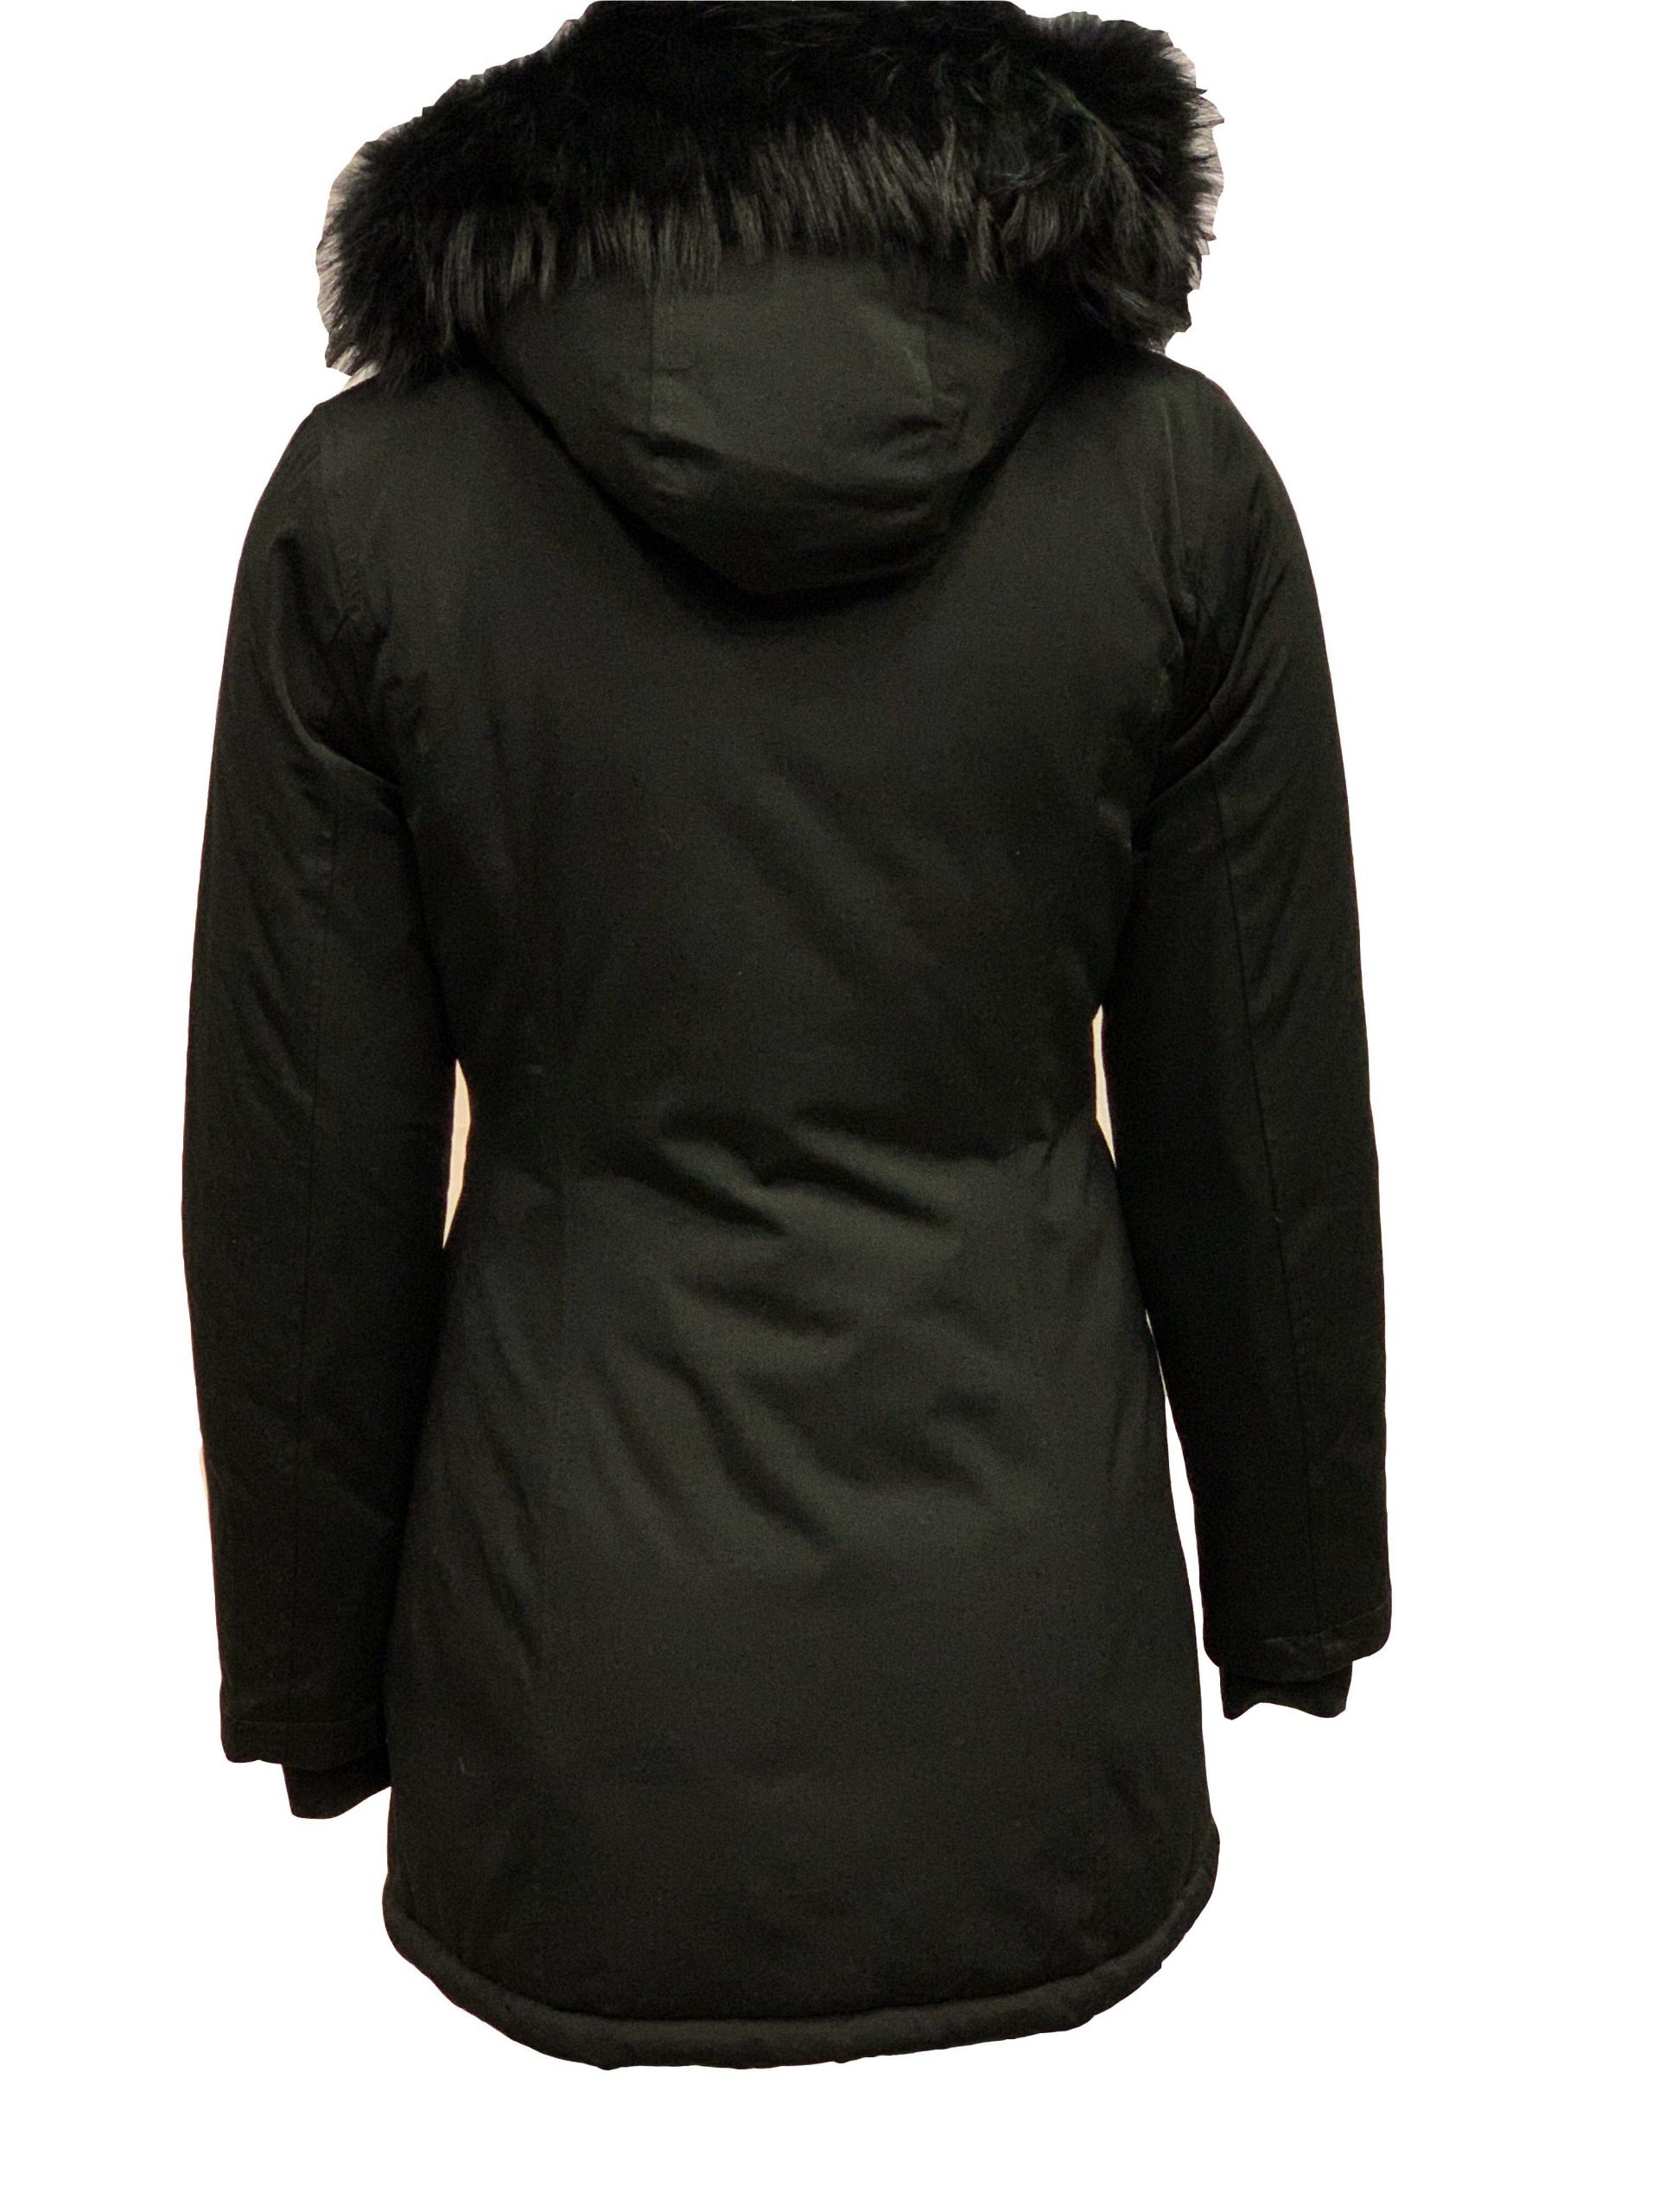 Ongewapend alcohol Bemiddelaar Winter dames jas met bontkraag zwart TT-canada – BK Leder